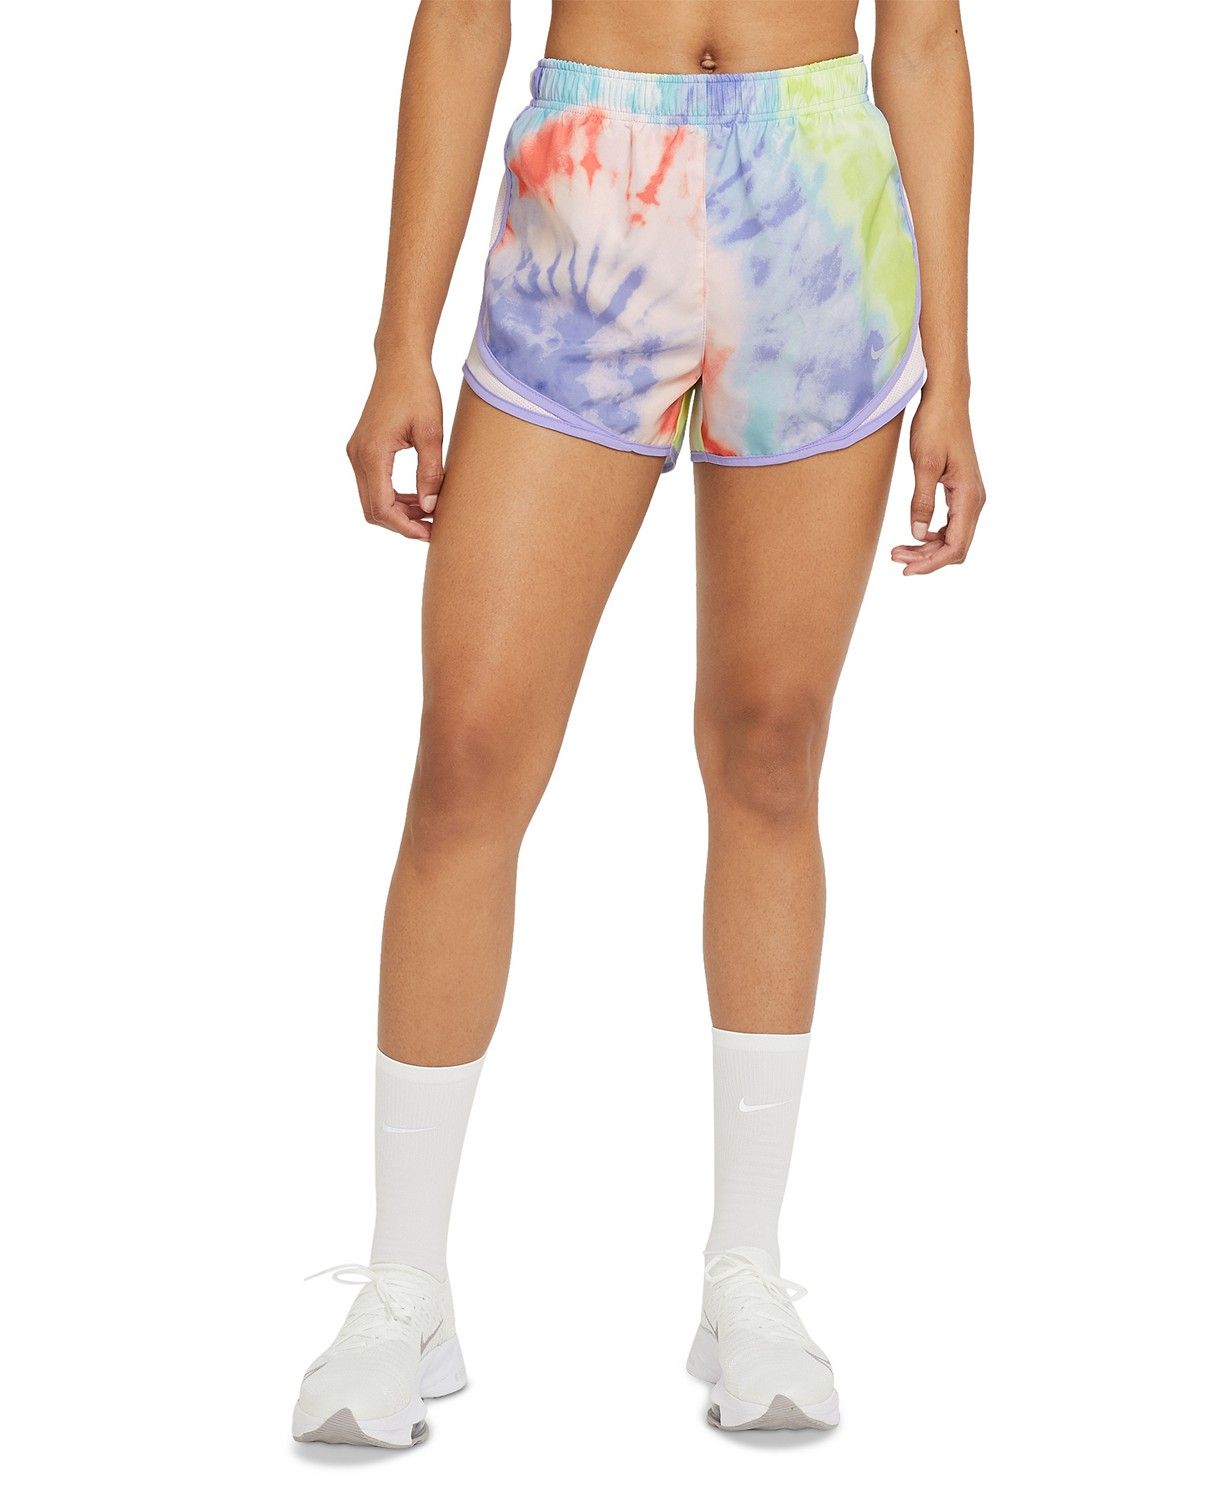 Nike Women's Tie-Dyed Active Shorts & Reviews - Shorts - Women - Macy's | Macys (US)